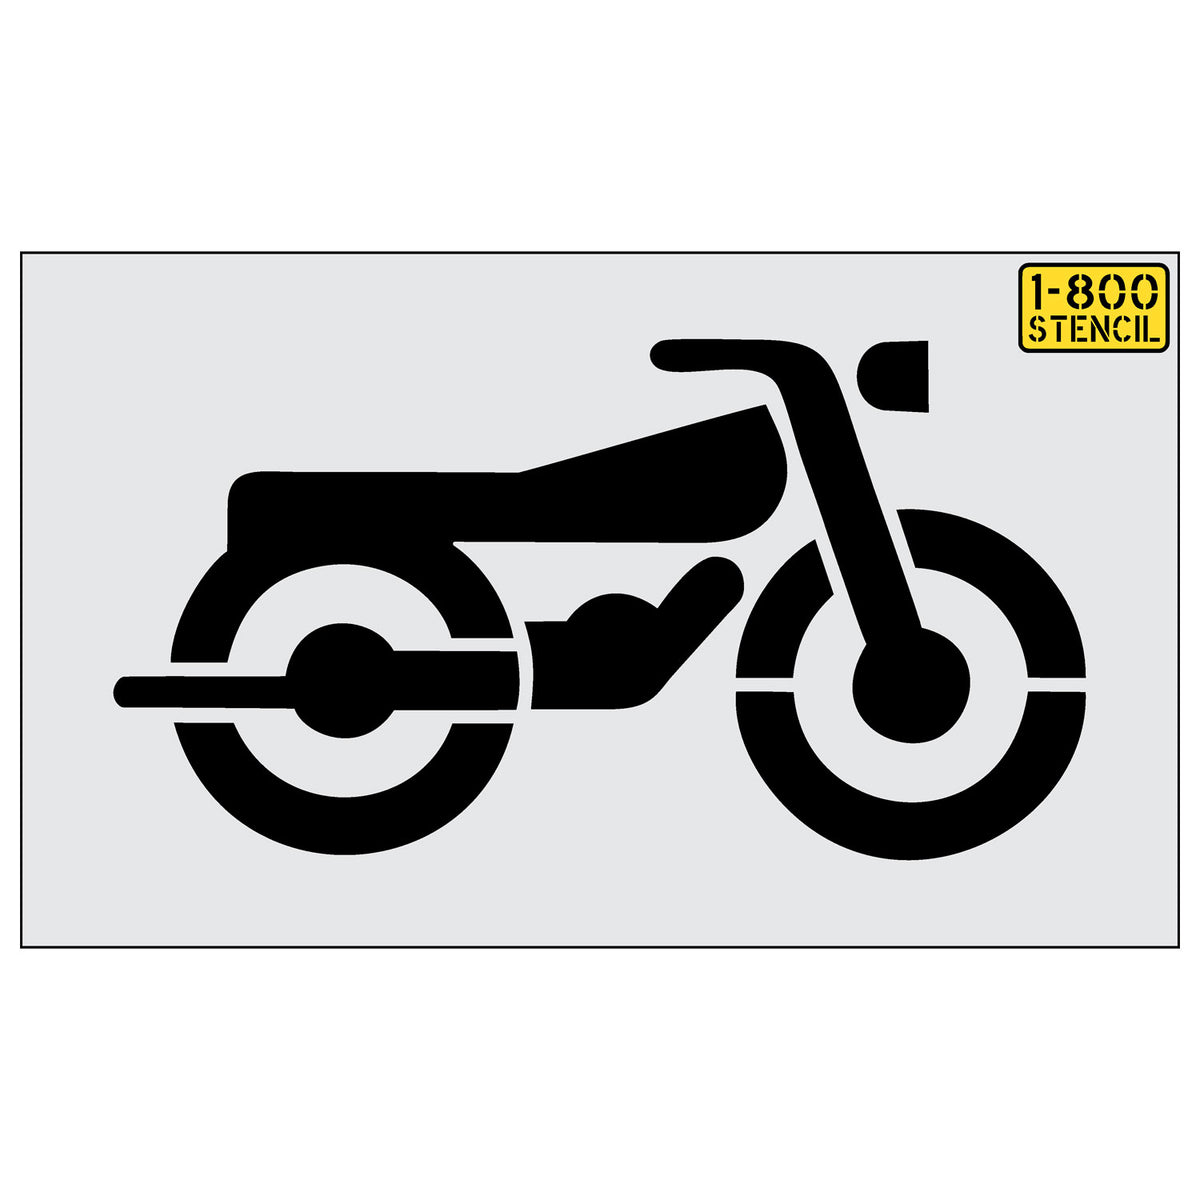 13,351 Bike Parking Sign Images, Stock Photos & Vectors | Shutterstock